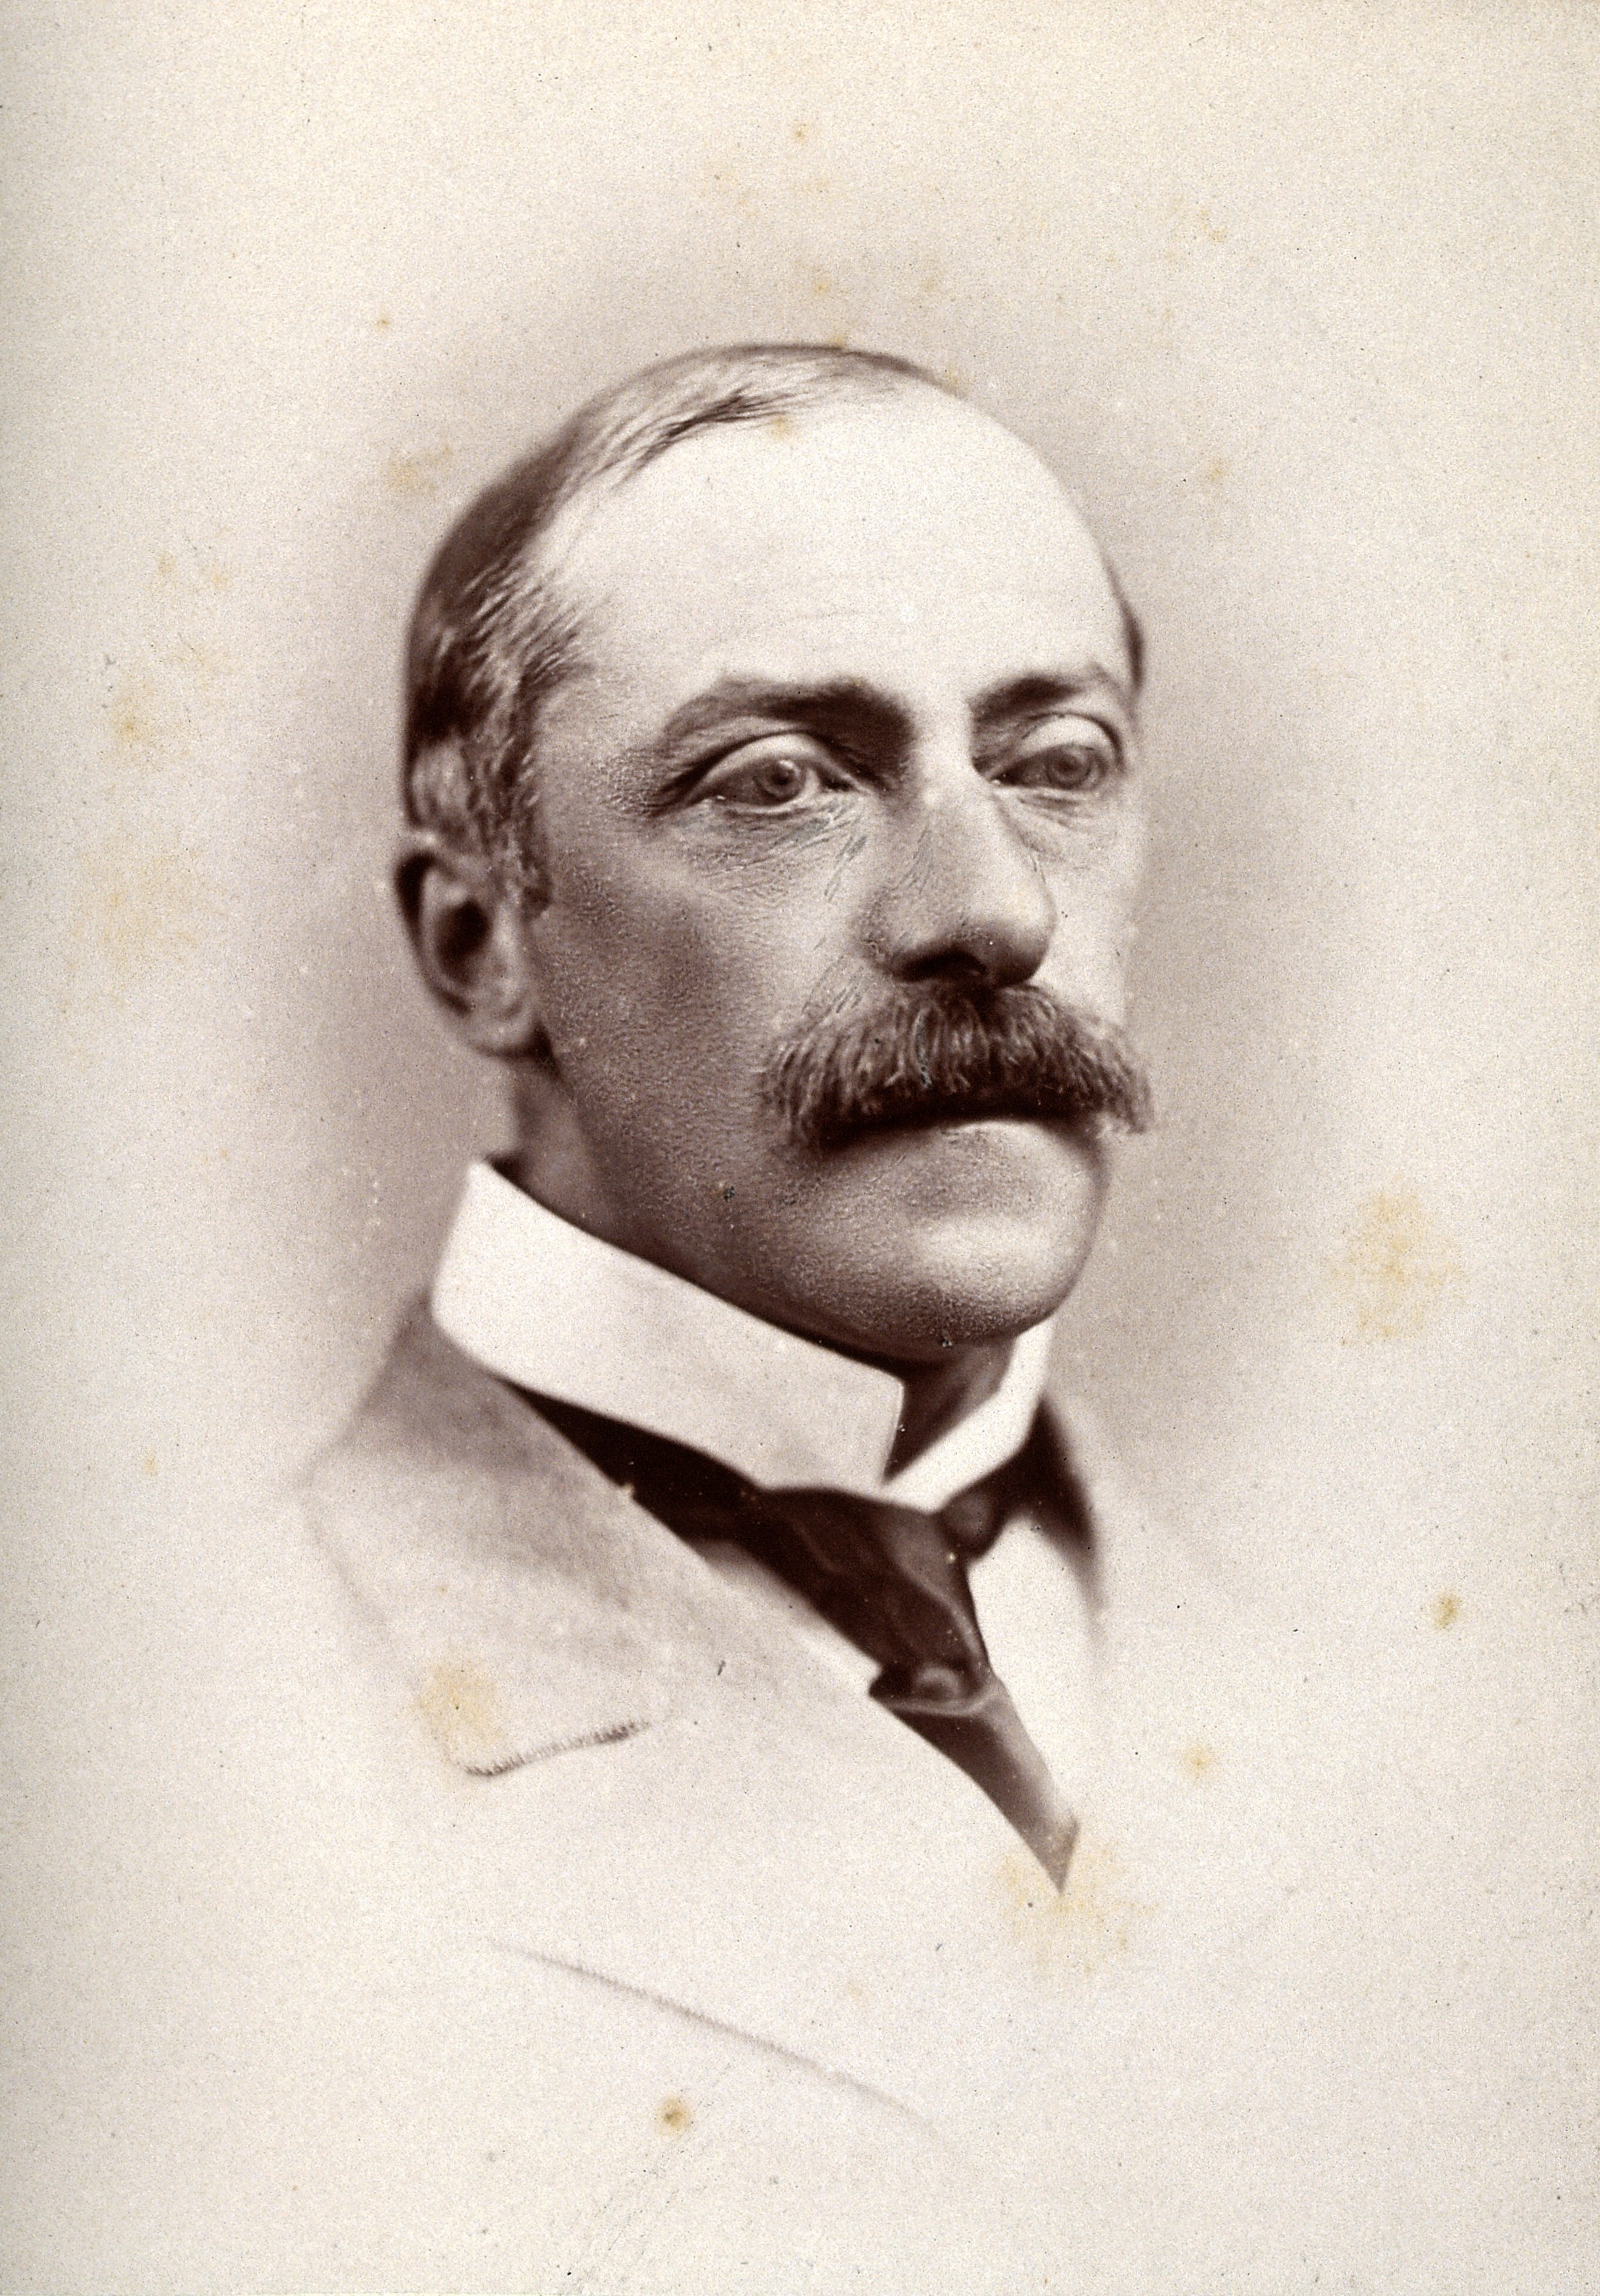 Sir William Bartlett Dalby. Photograph by G. Jerrard, 1881. Wellcome V0026266